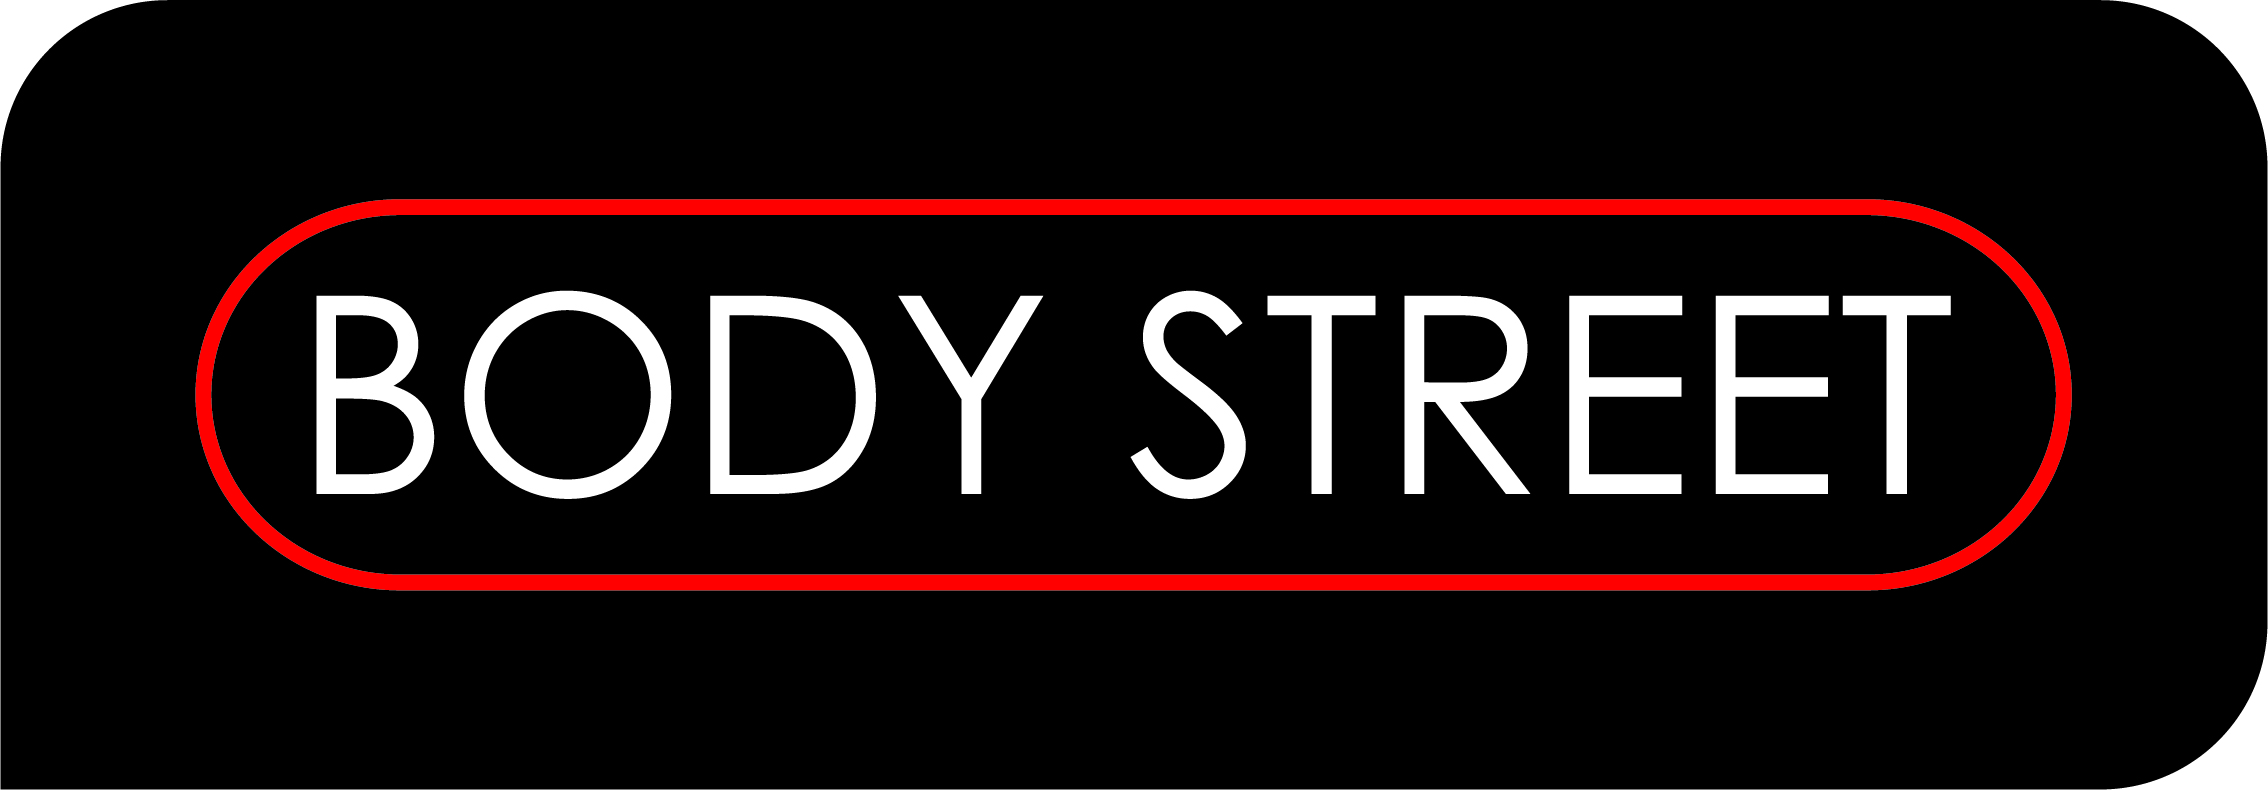 Bodystreet-Label-Logo-Web